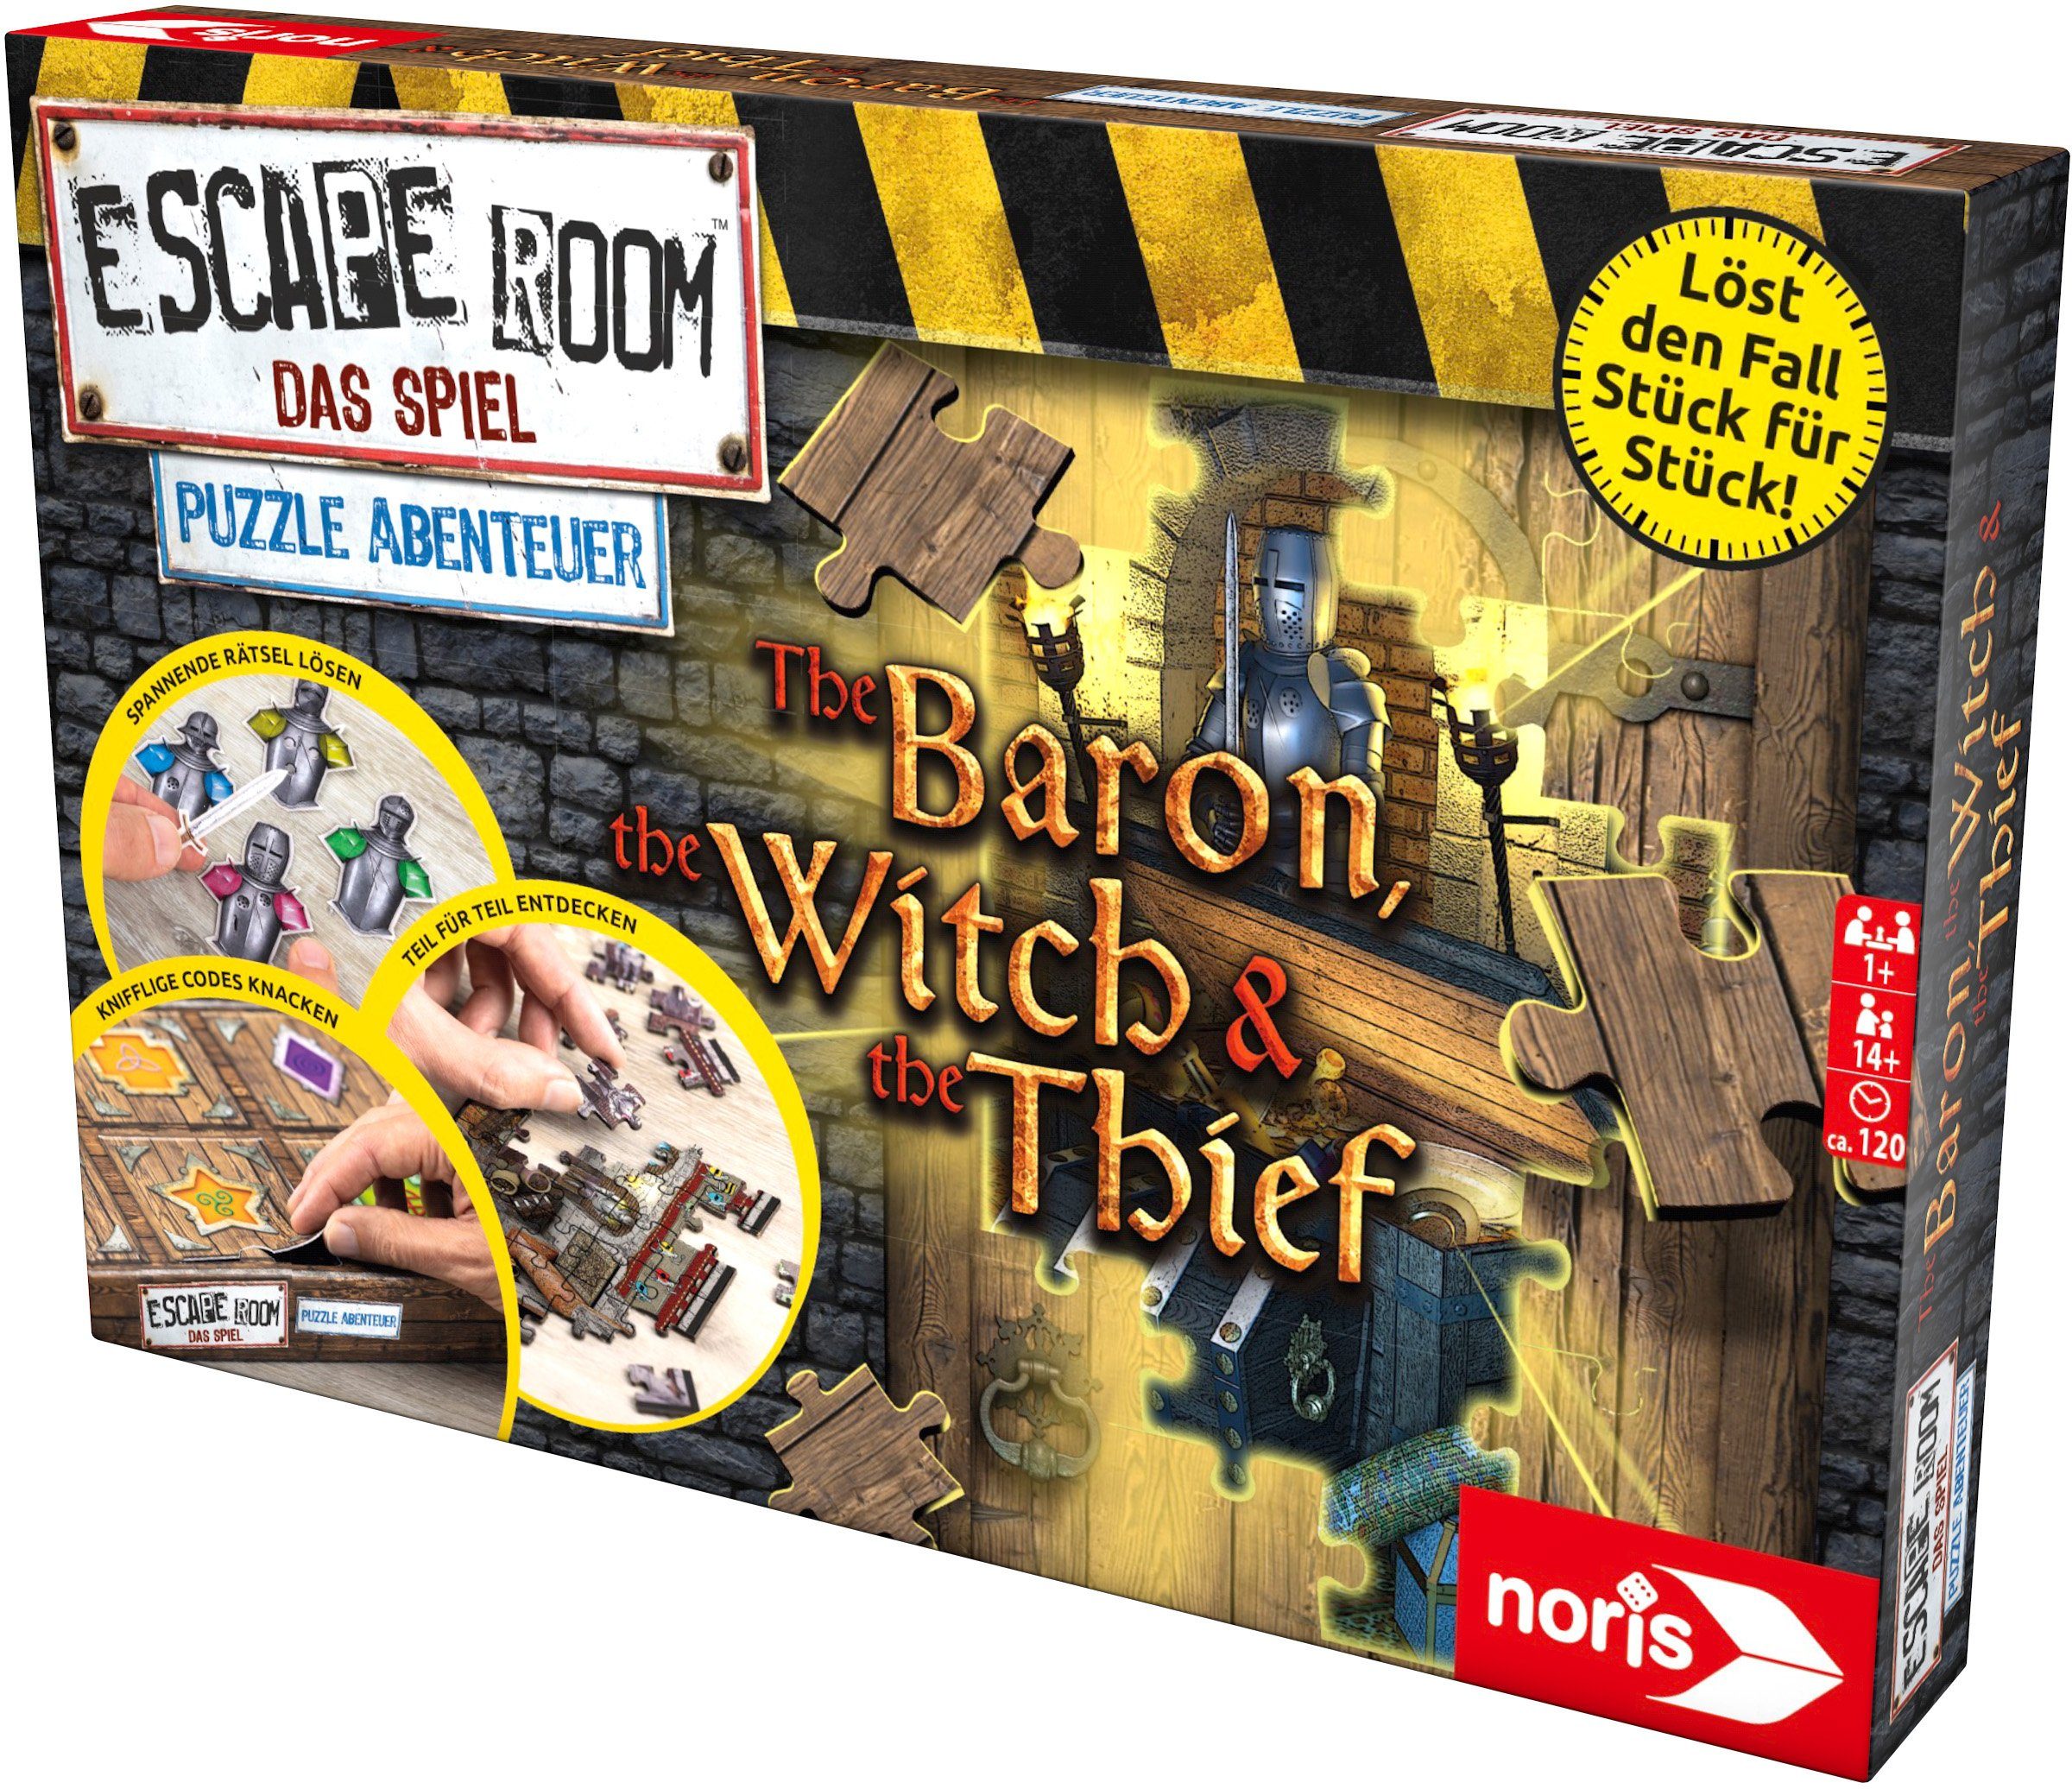 Noris Spiel, Strategiespiel Escape Room Spiel Escape & - Thief, The Baron, Witch The Abenteuer Room The Das Puzzle